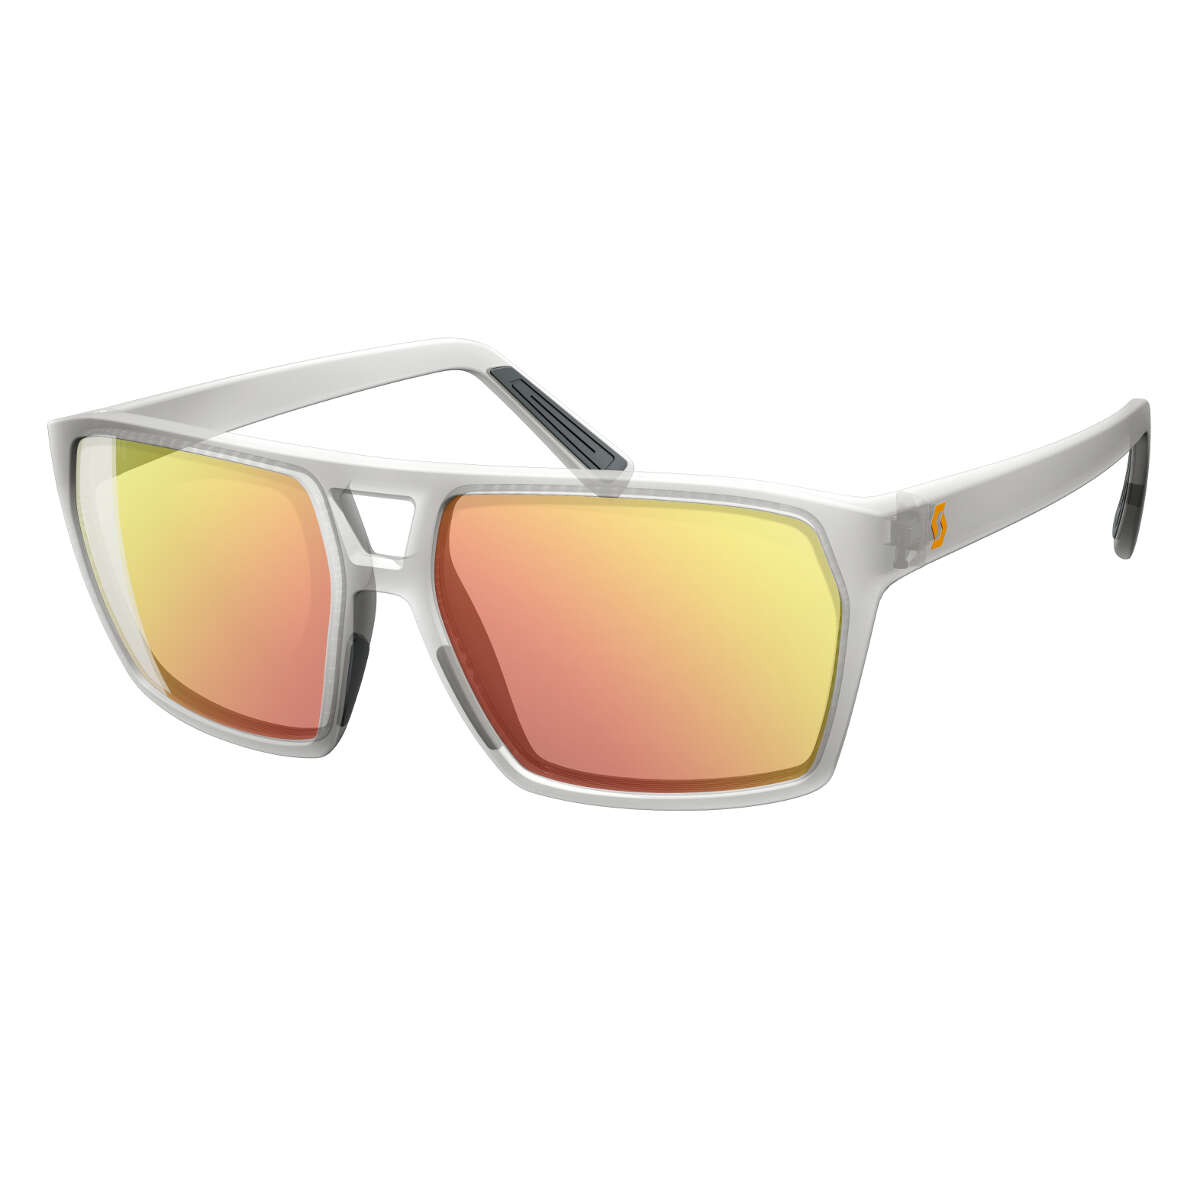 Scott Sunglasses Tune Grey Translucent - Red Chrome